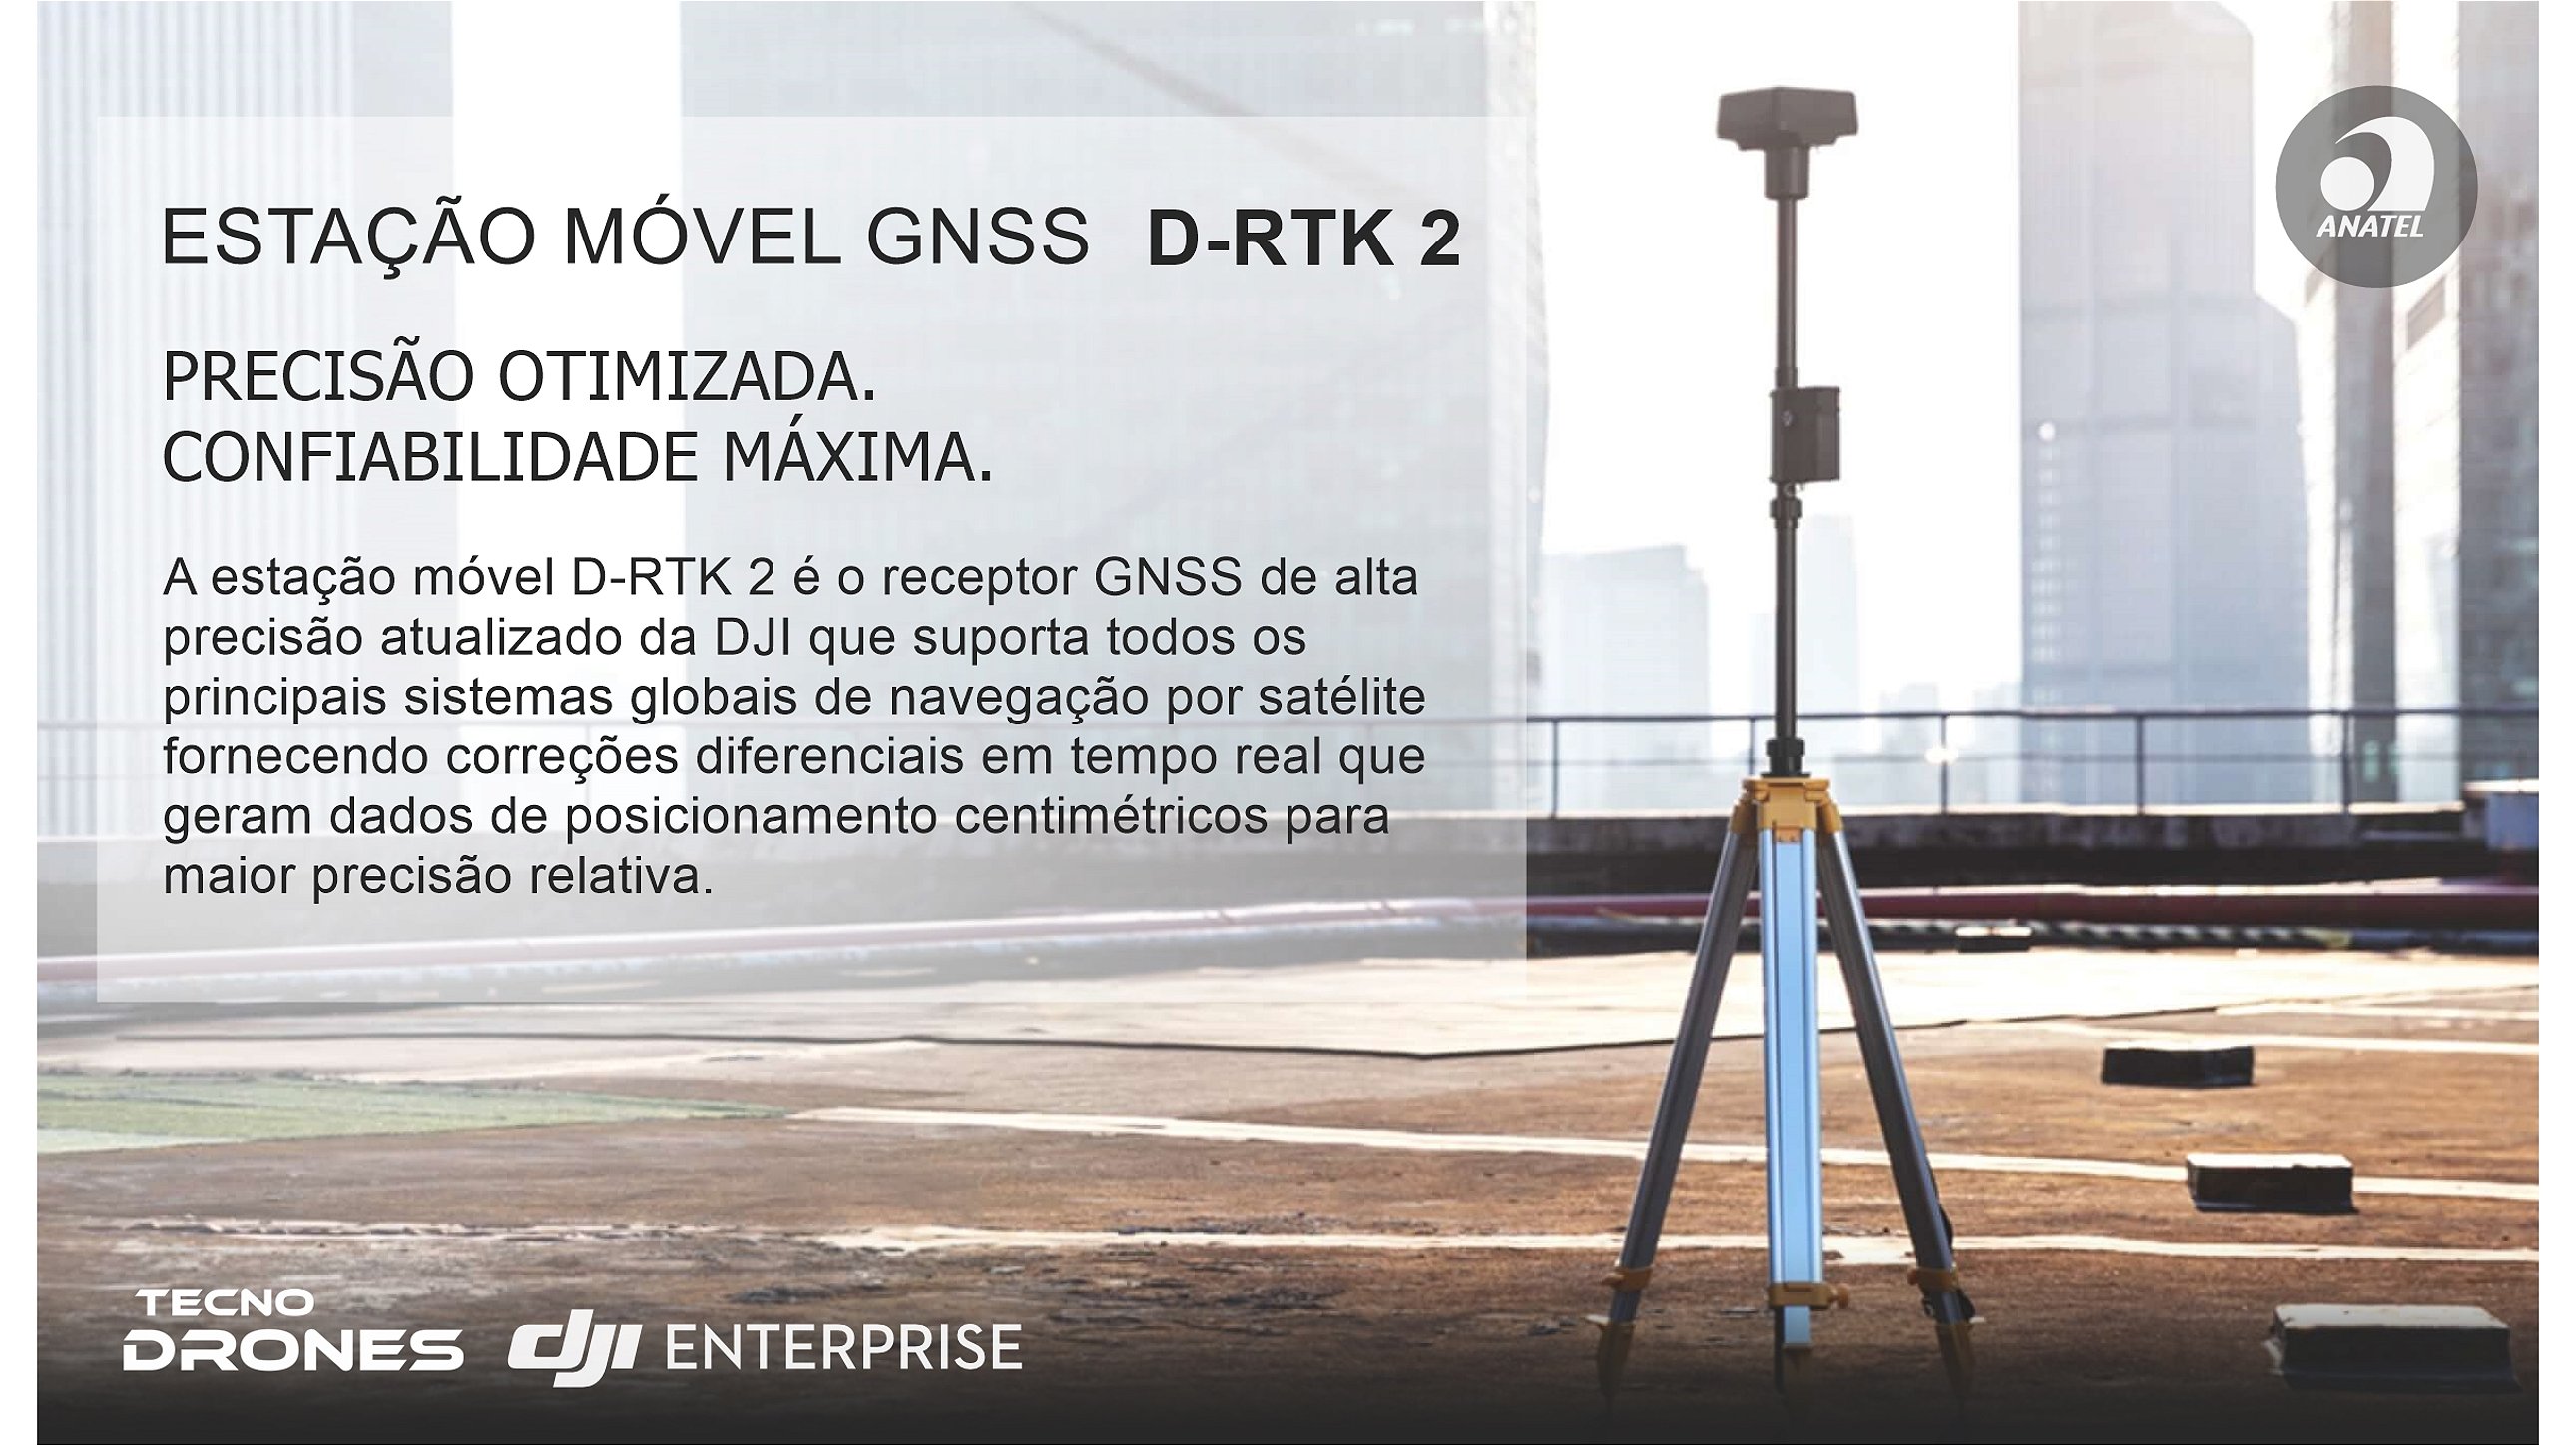 Estação Móvel GNSS D-RTK 2